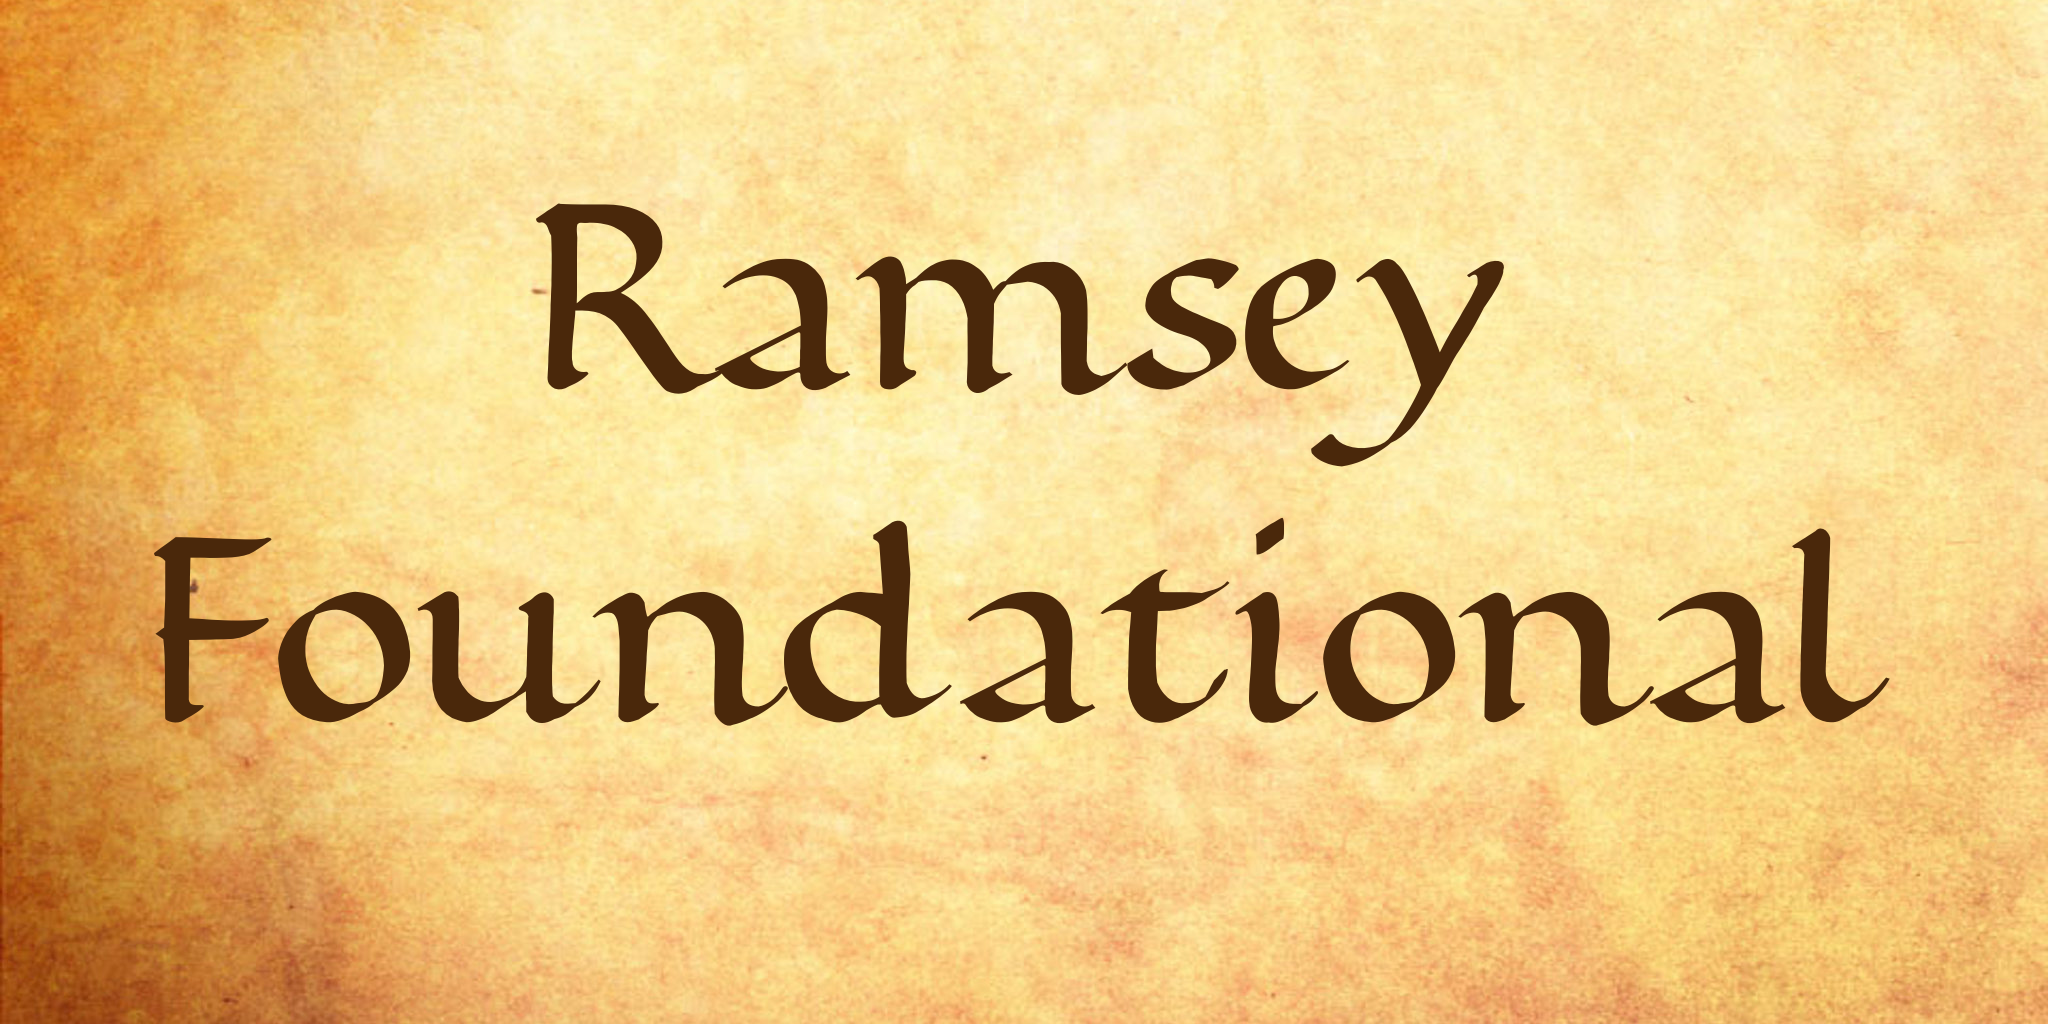 Ramsey Foundational